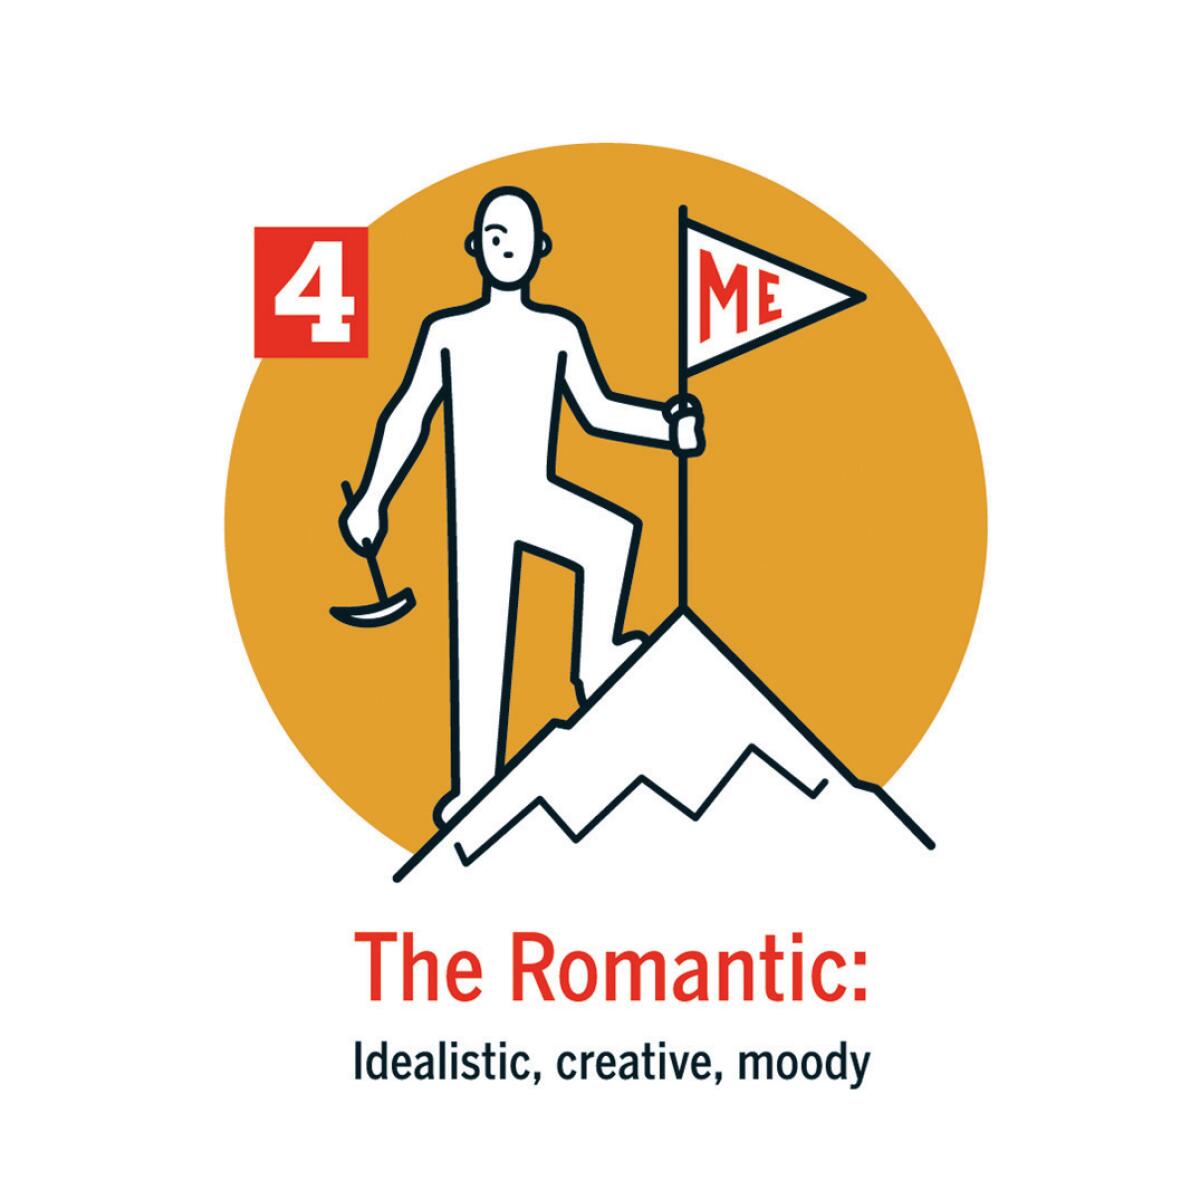 "The Romantic" is creative, moody.